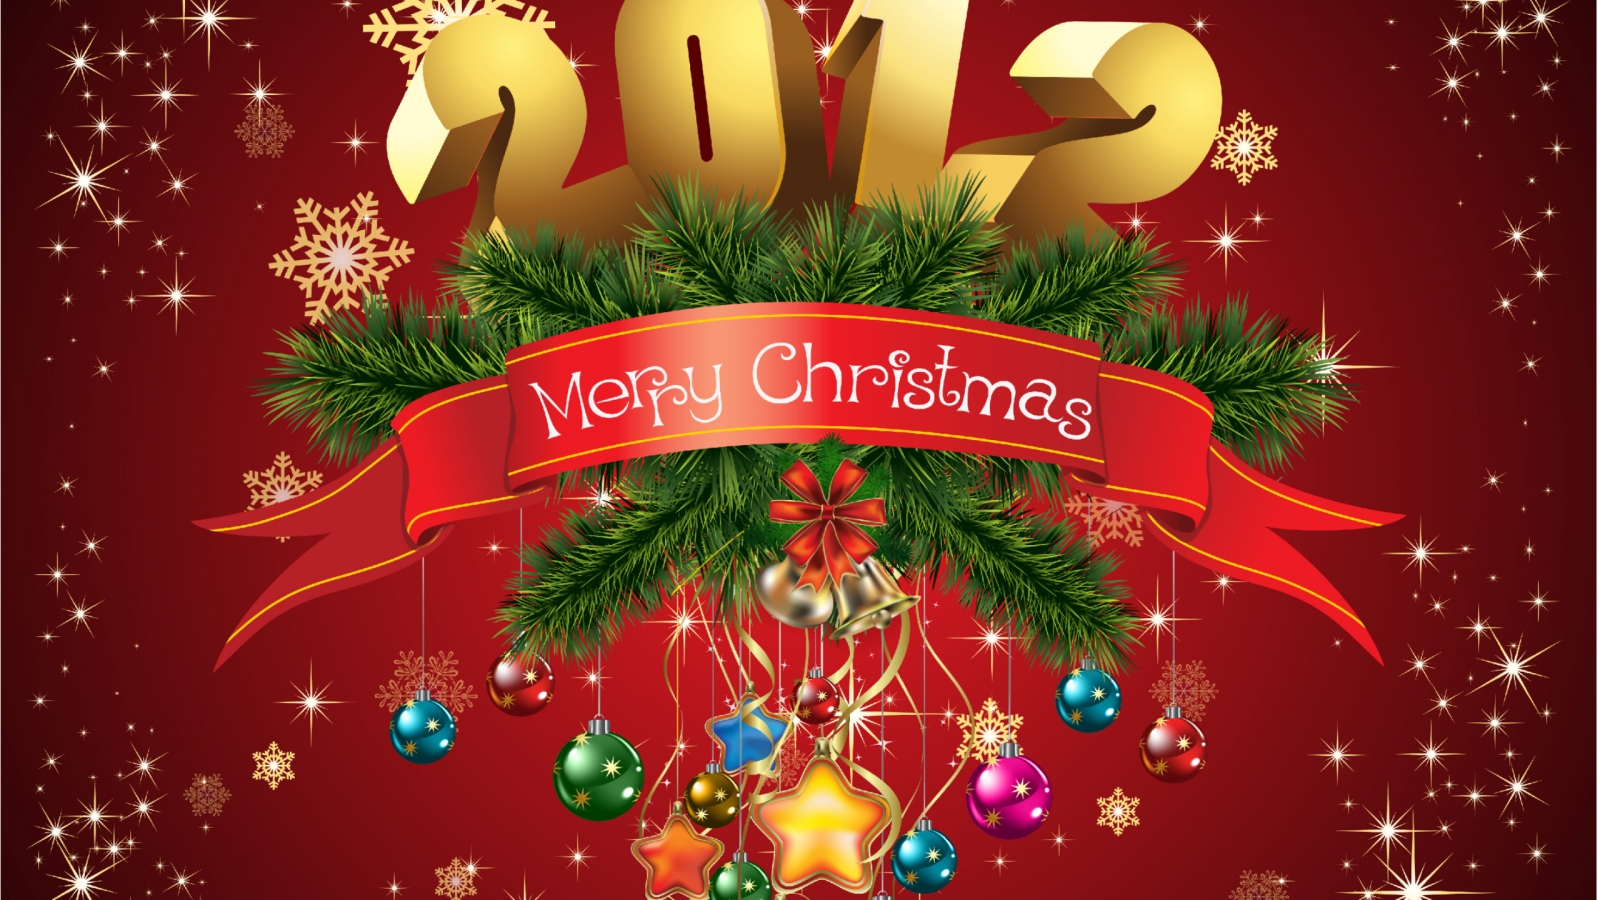 Merry Christmas 2012 for 1600 x 900 HDTV resolution